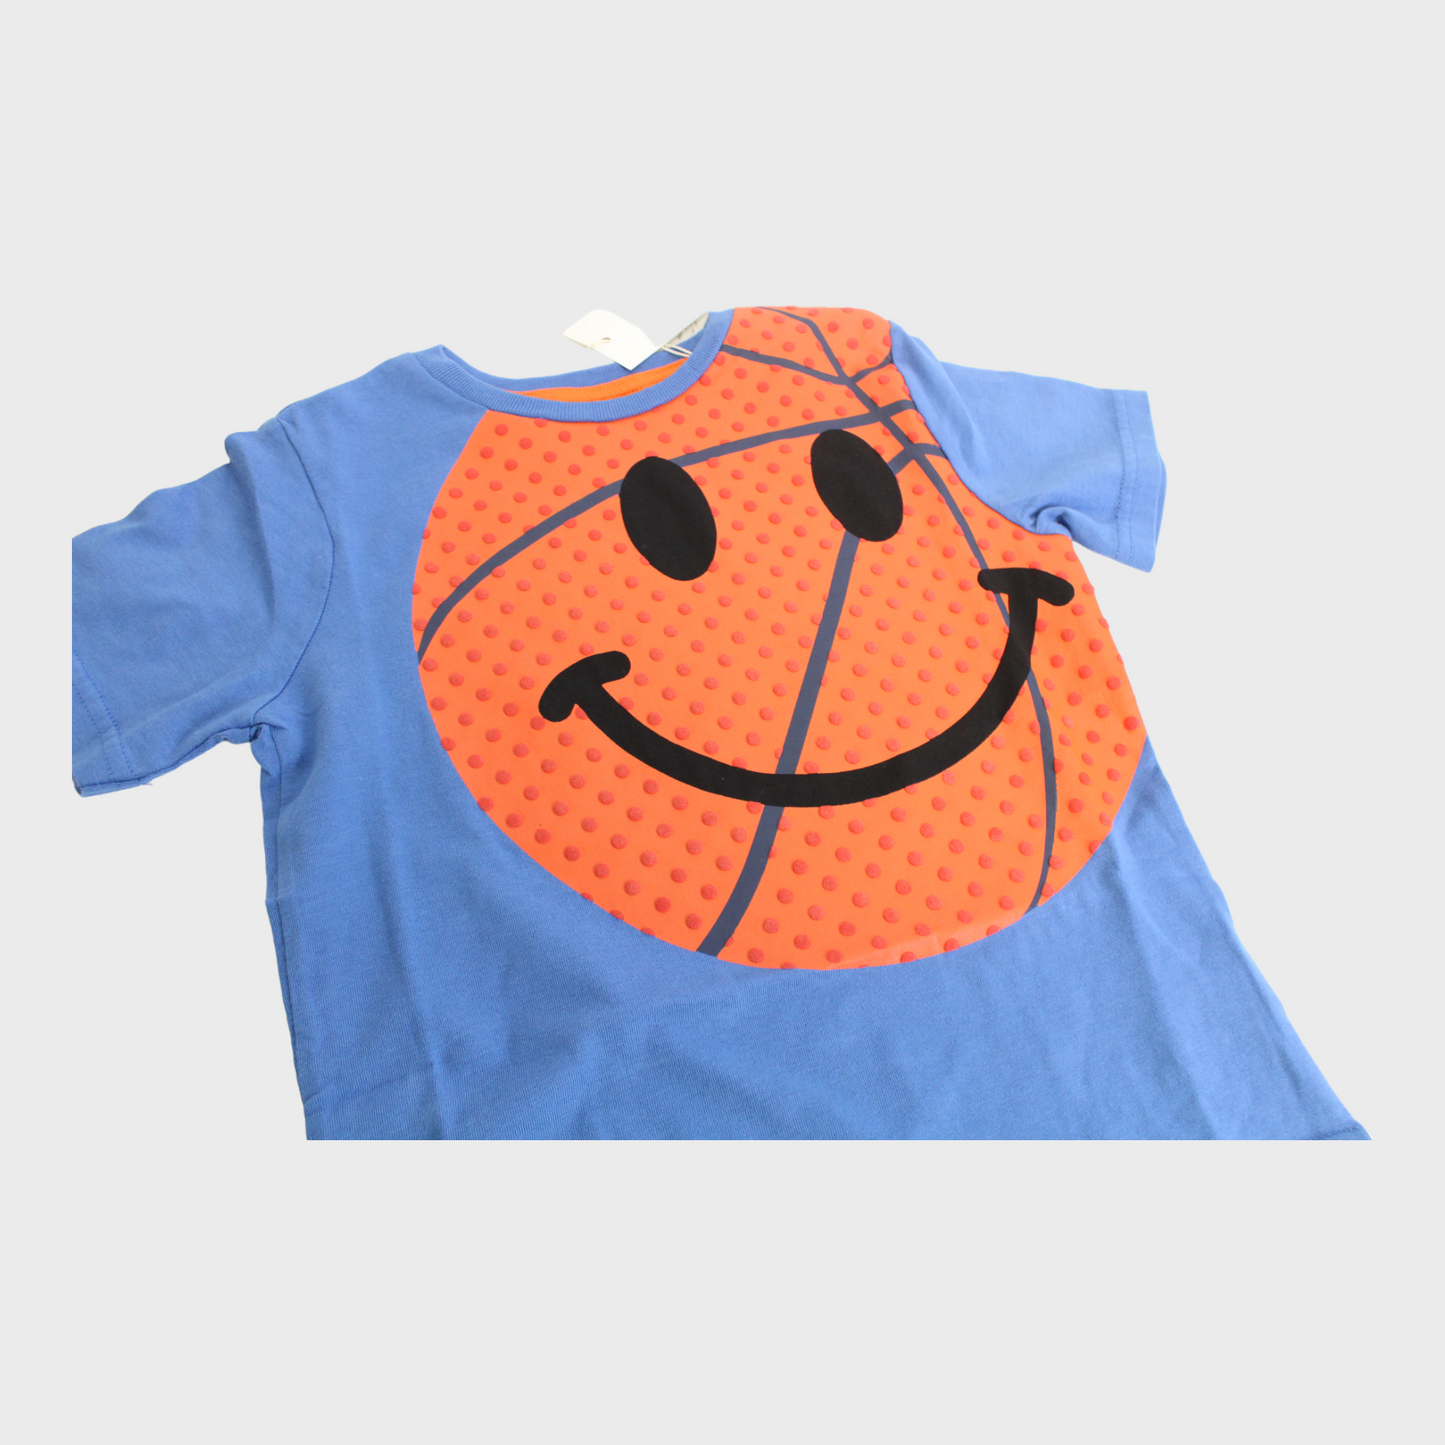 Kids Smiley Face T-shirt